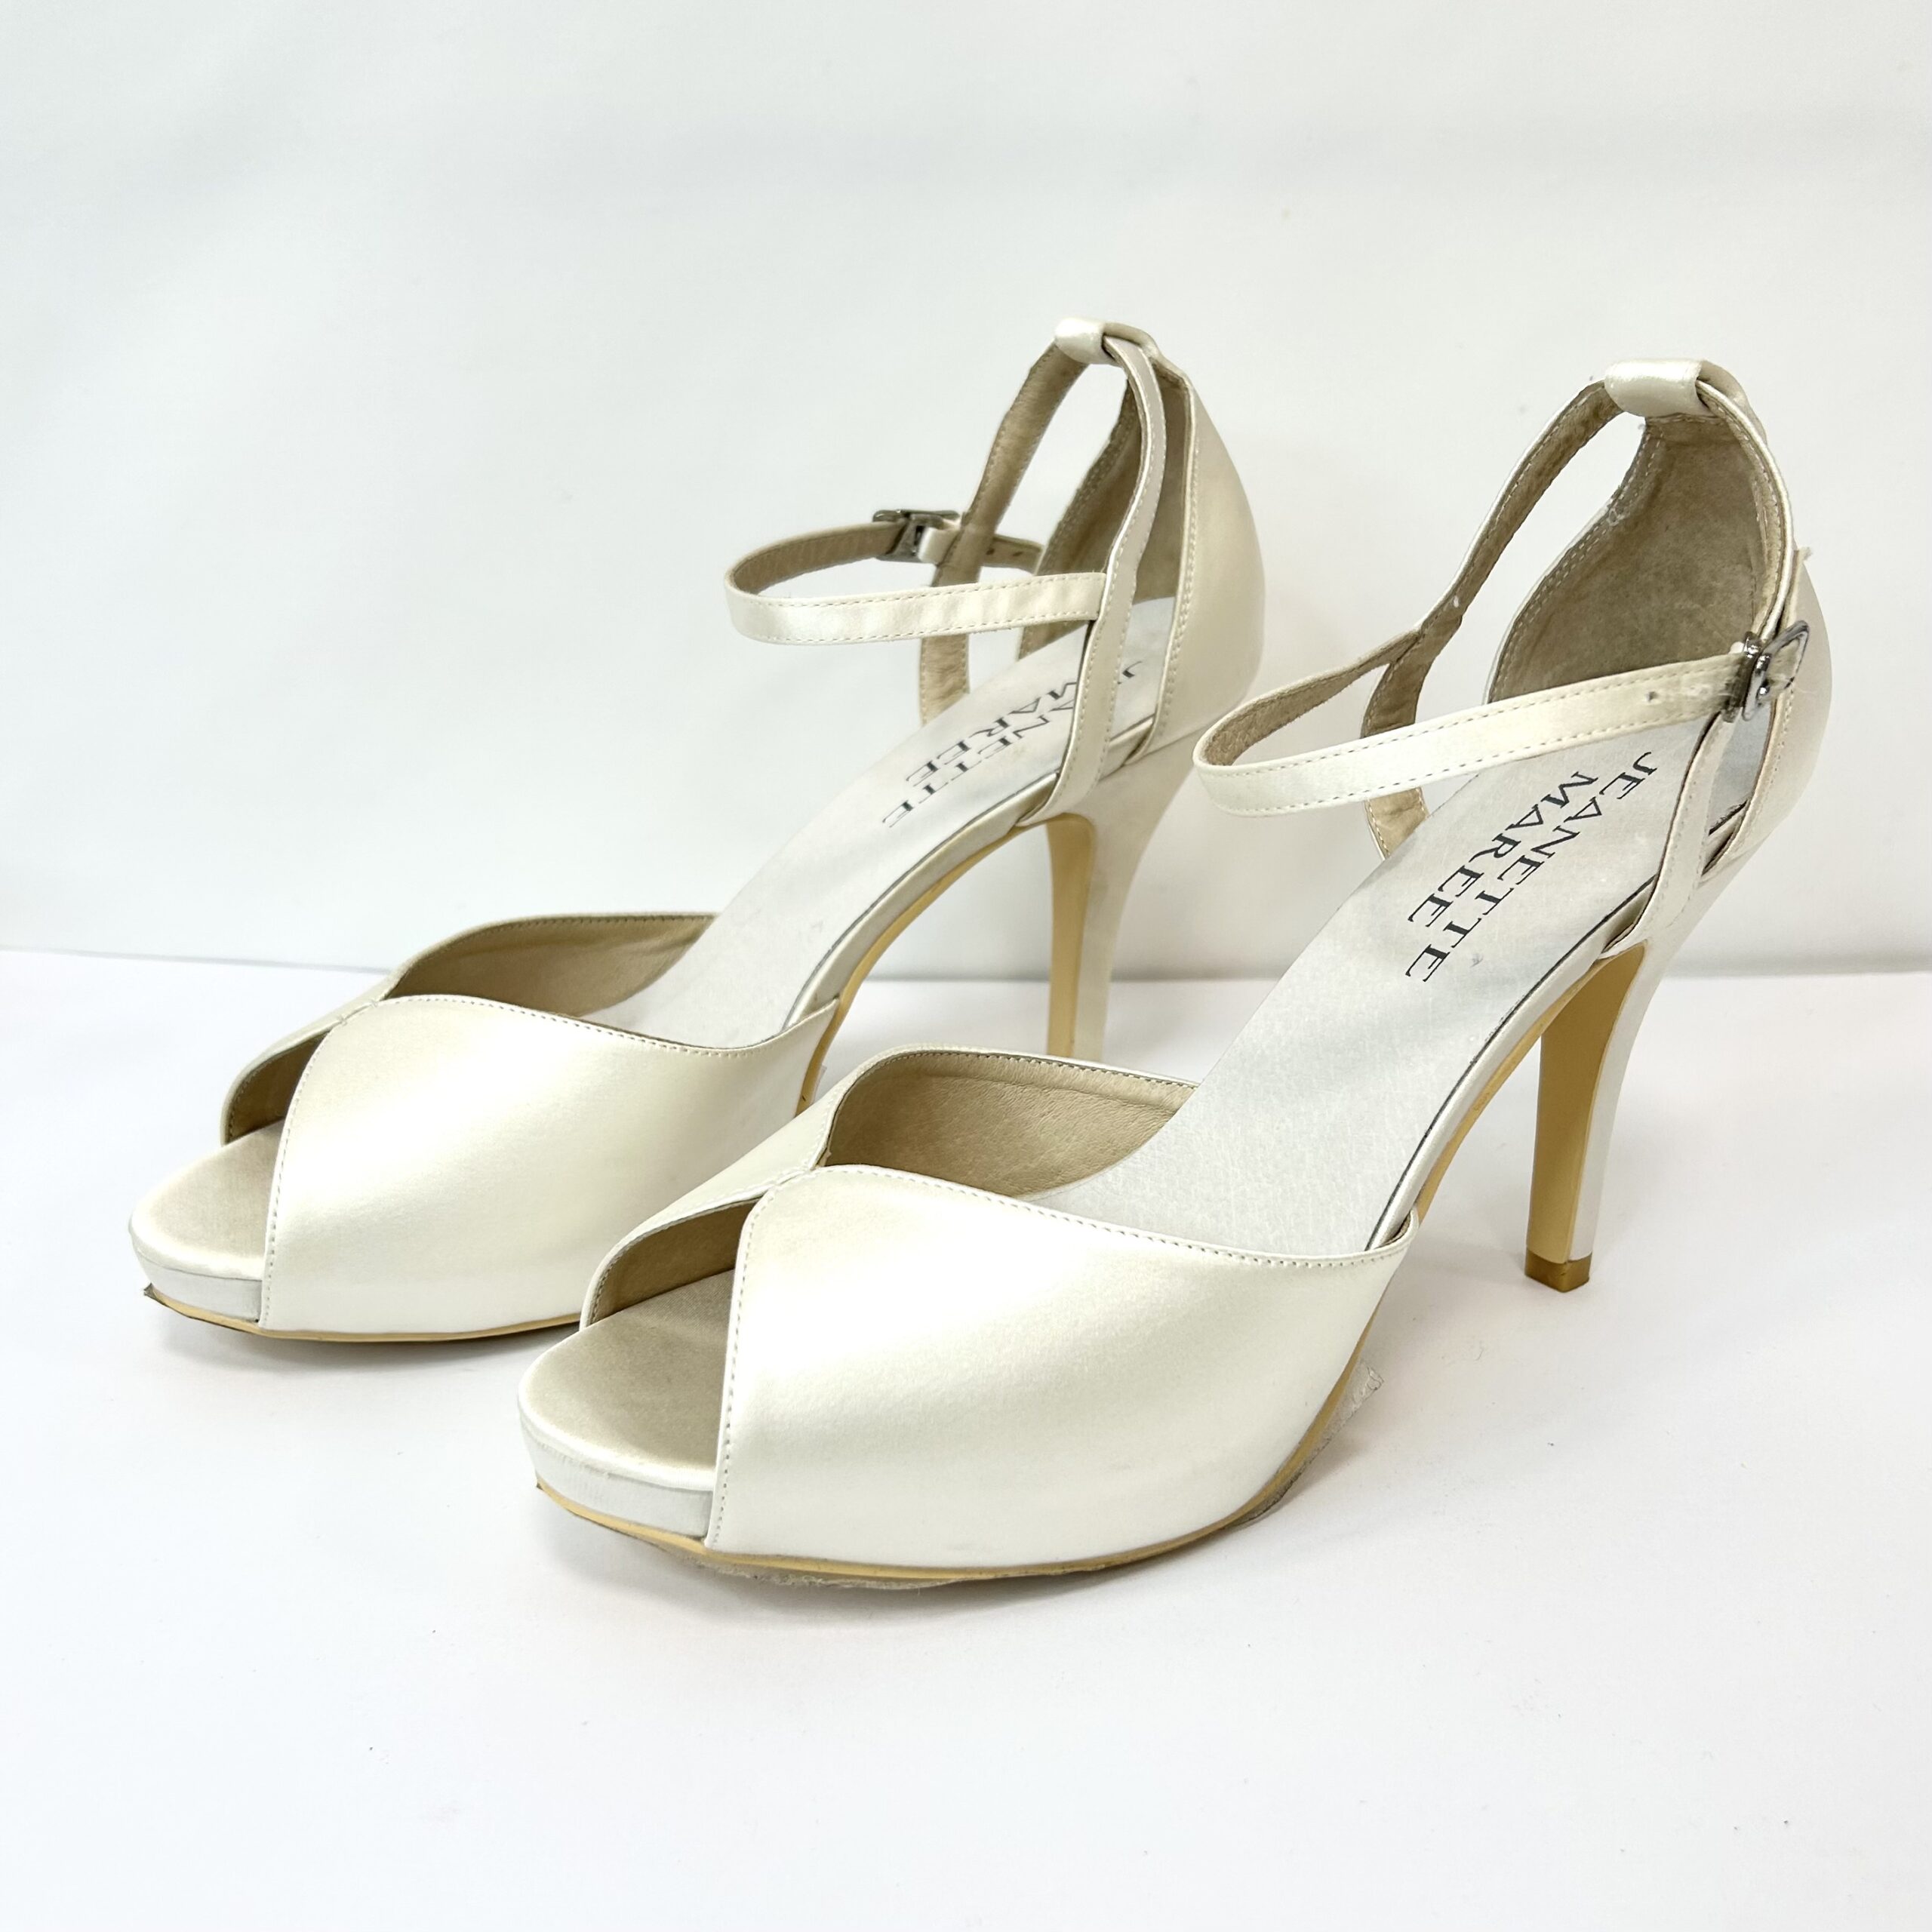 Yvonne I Jeanette Maree|ivory satin wedding shoes|yvonne sale I Jeanette Maree